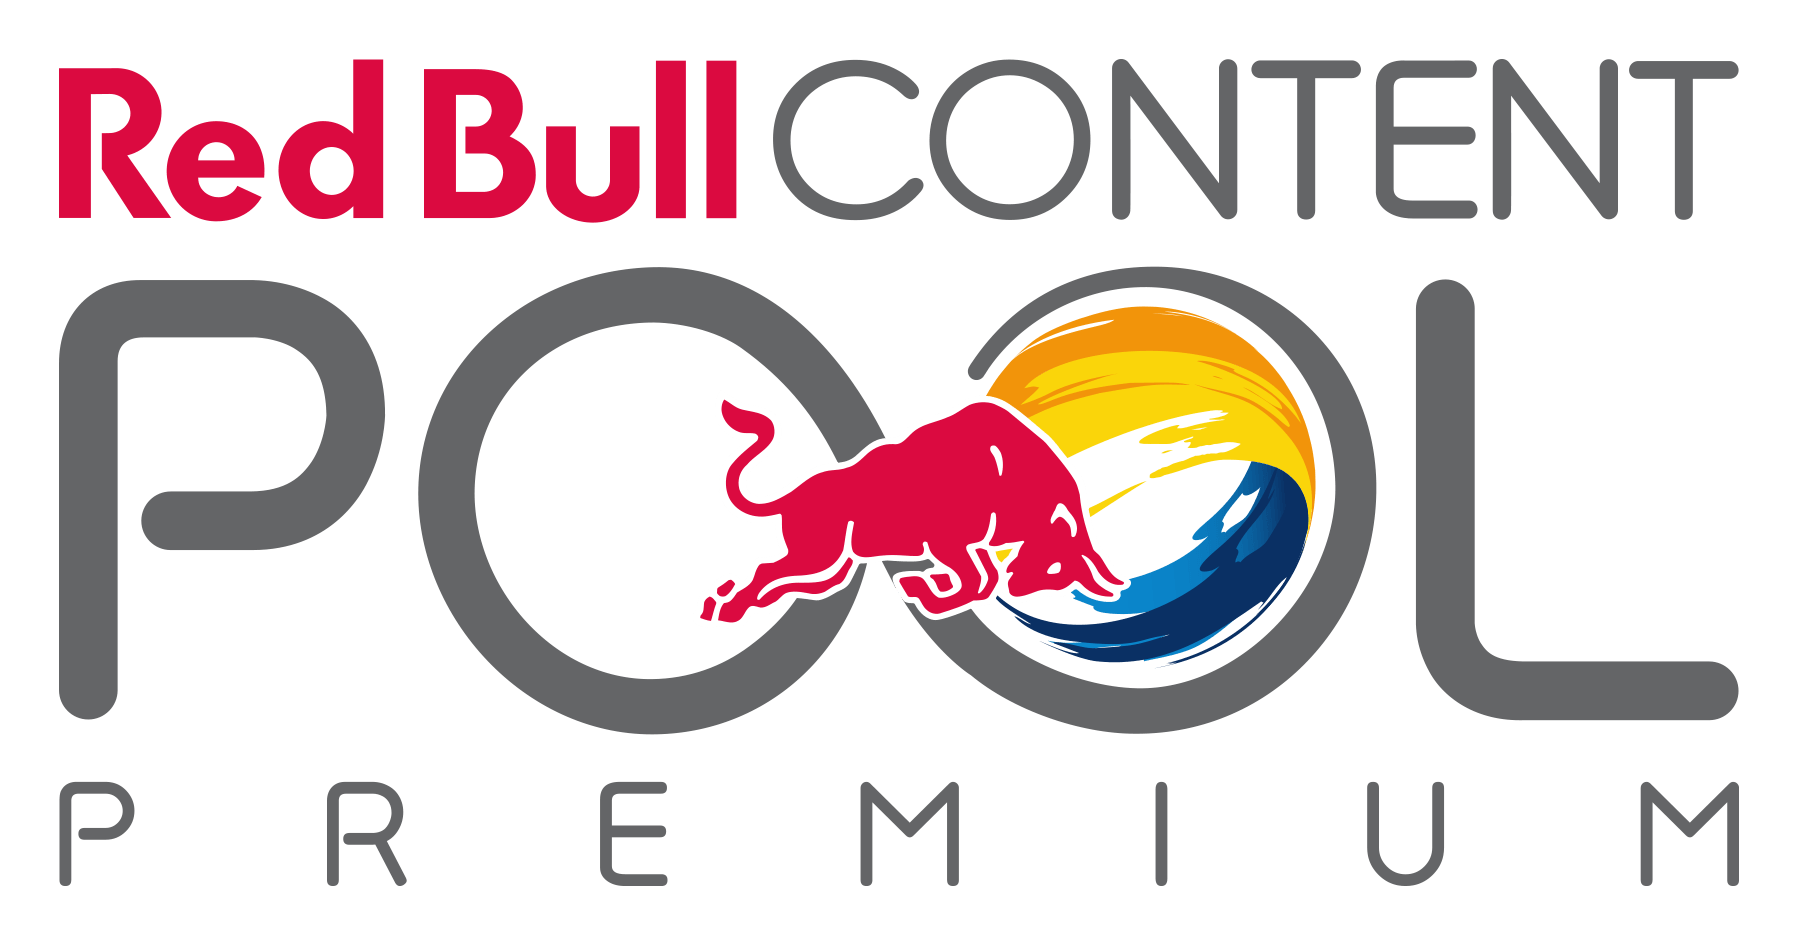 Red Media Logo - Multi Platform Media Company. Red Bull Media House